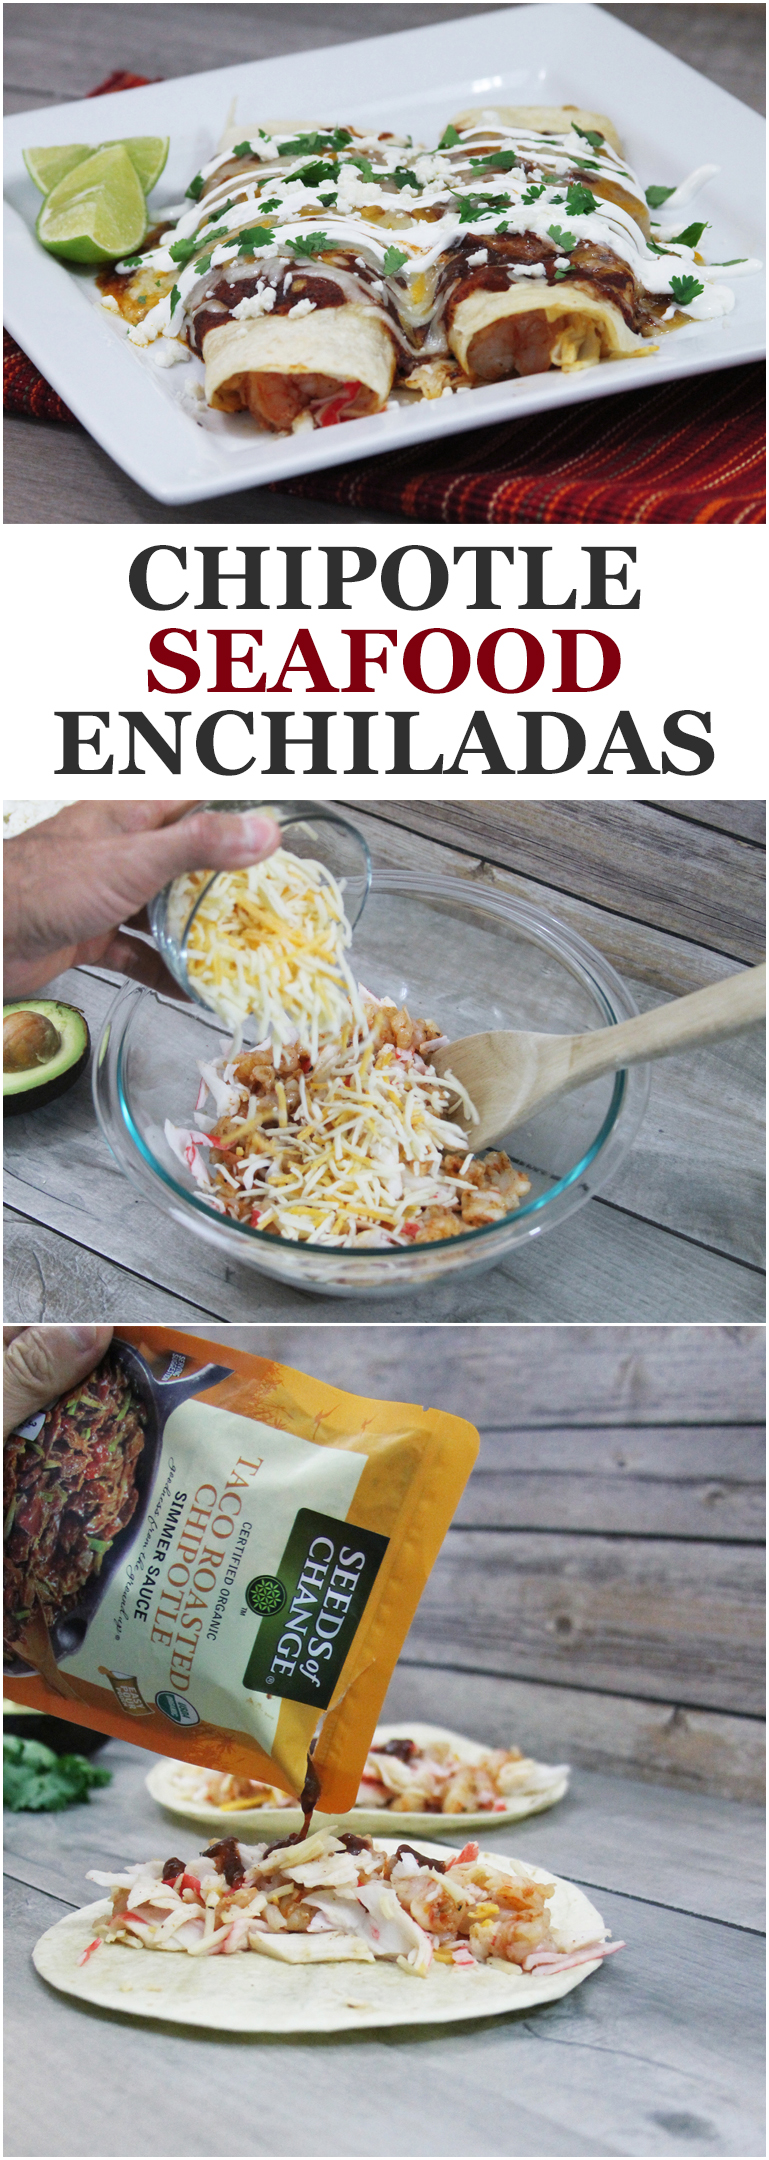 chipotle seafood enchiladas